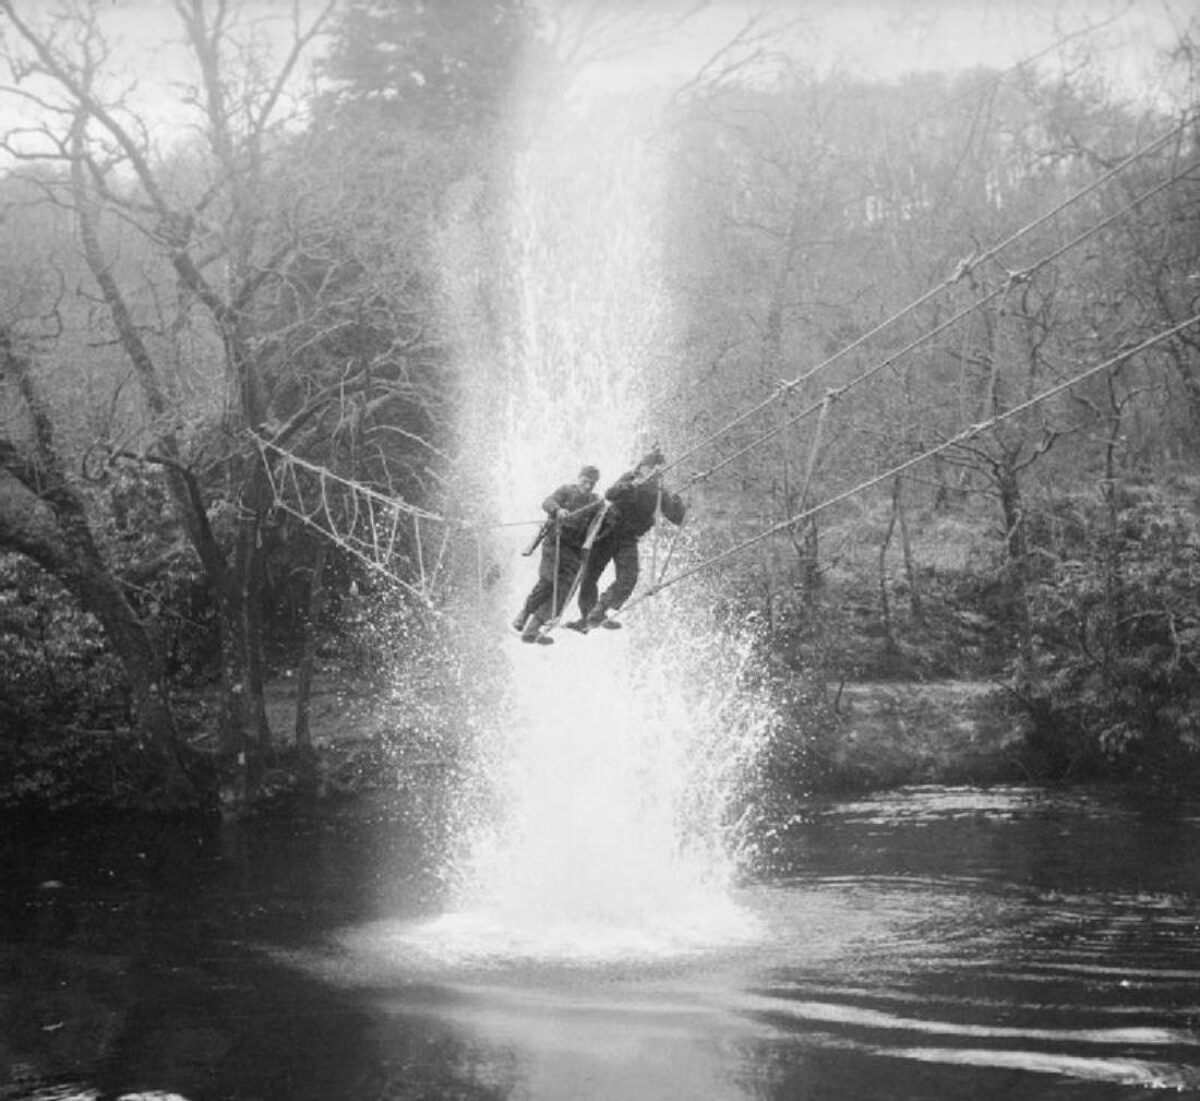 Commandos practice crossing a river using a toggle bridge Acnacharry Jan 1943